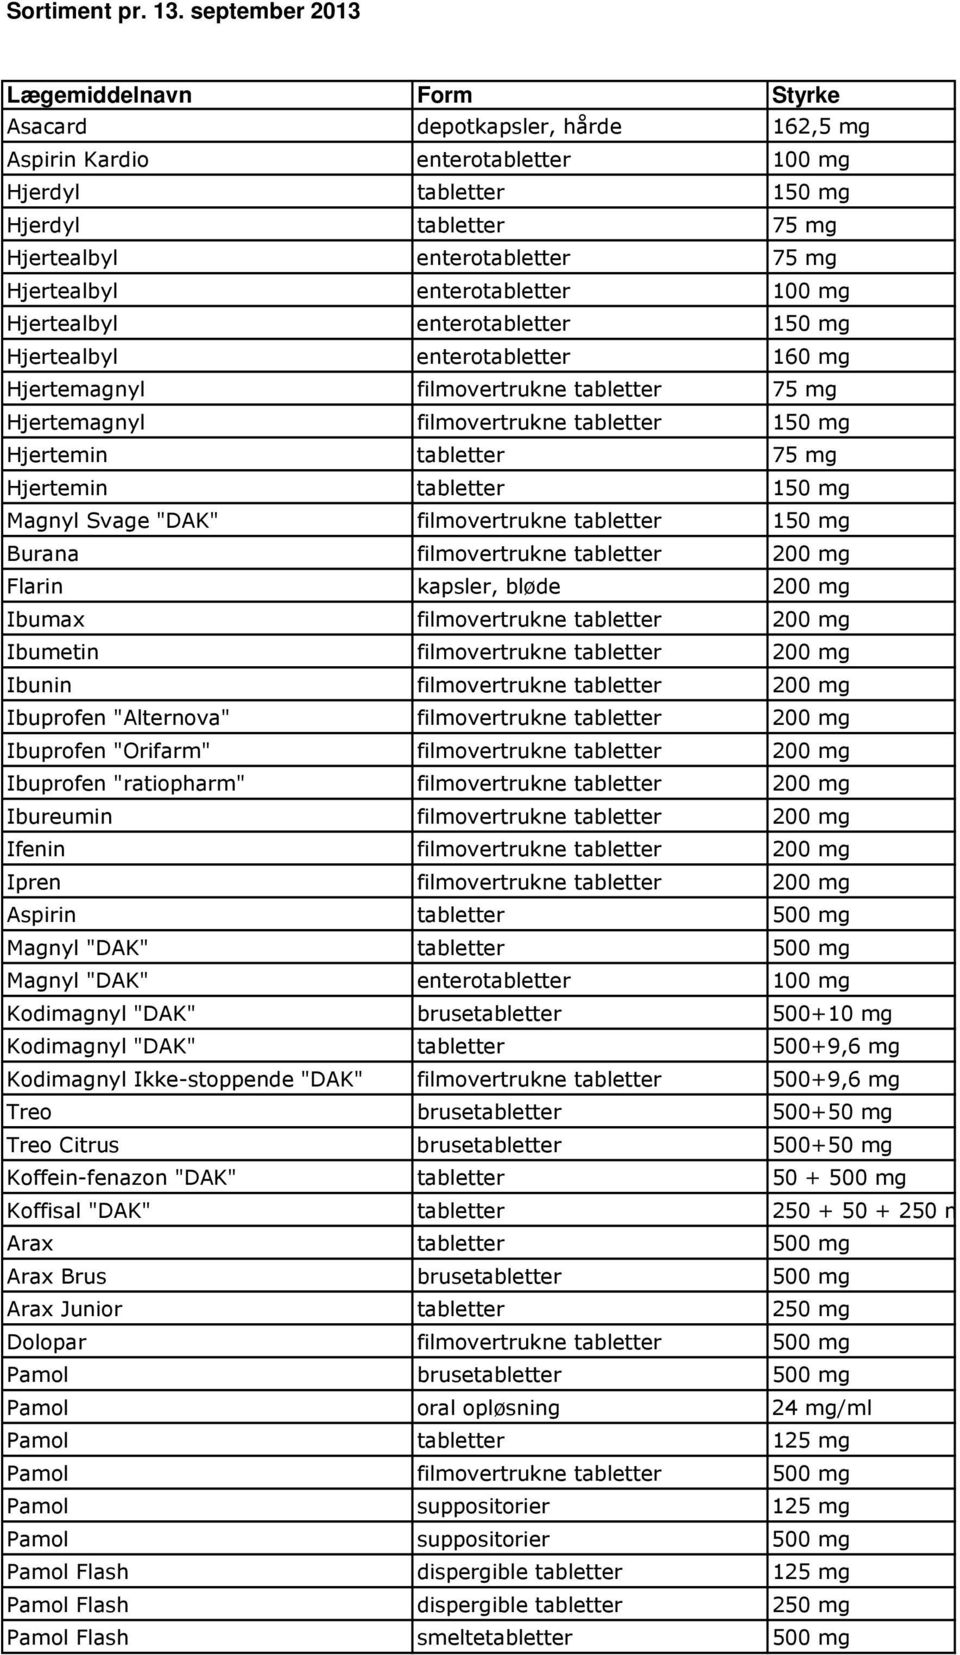 Hjertealbyl enterotabletter 100 mg Hjertealbyl enterotabletter 150 mg Hjertealbyl enterotabletter 160 mg Hjertemagnyl filmovertrukne tabletter 75 mg Hjertemagnyl filmovertrukne tabletter 150 mg